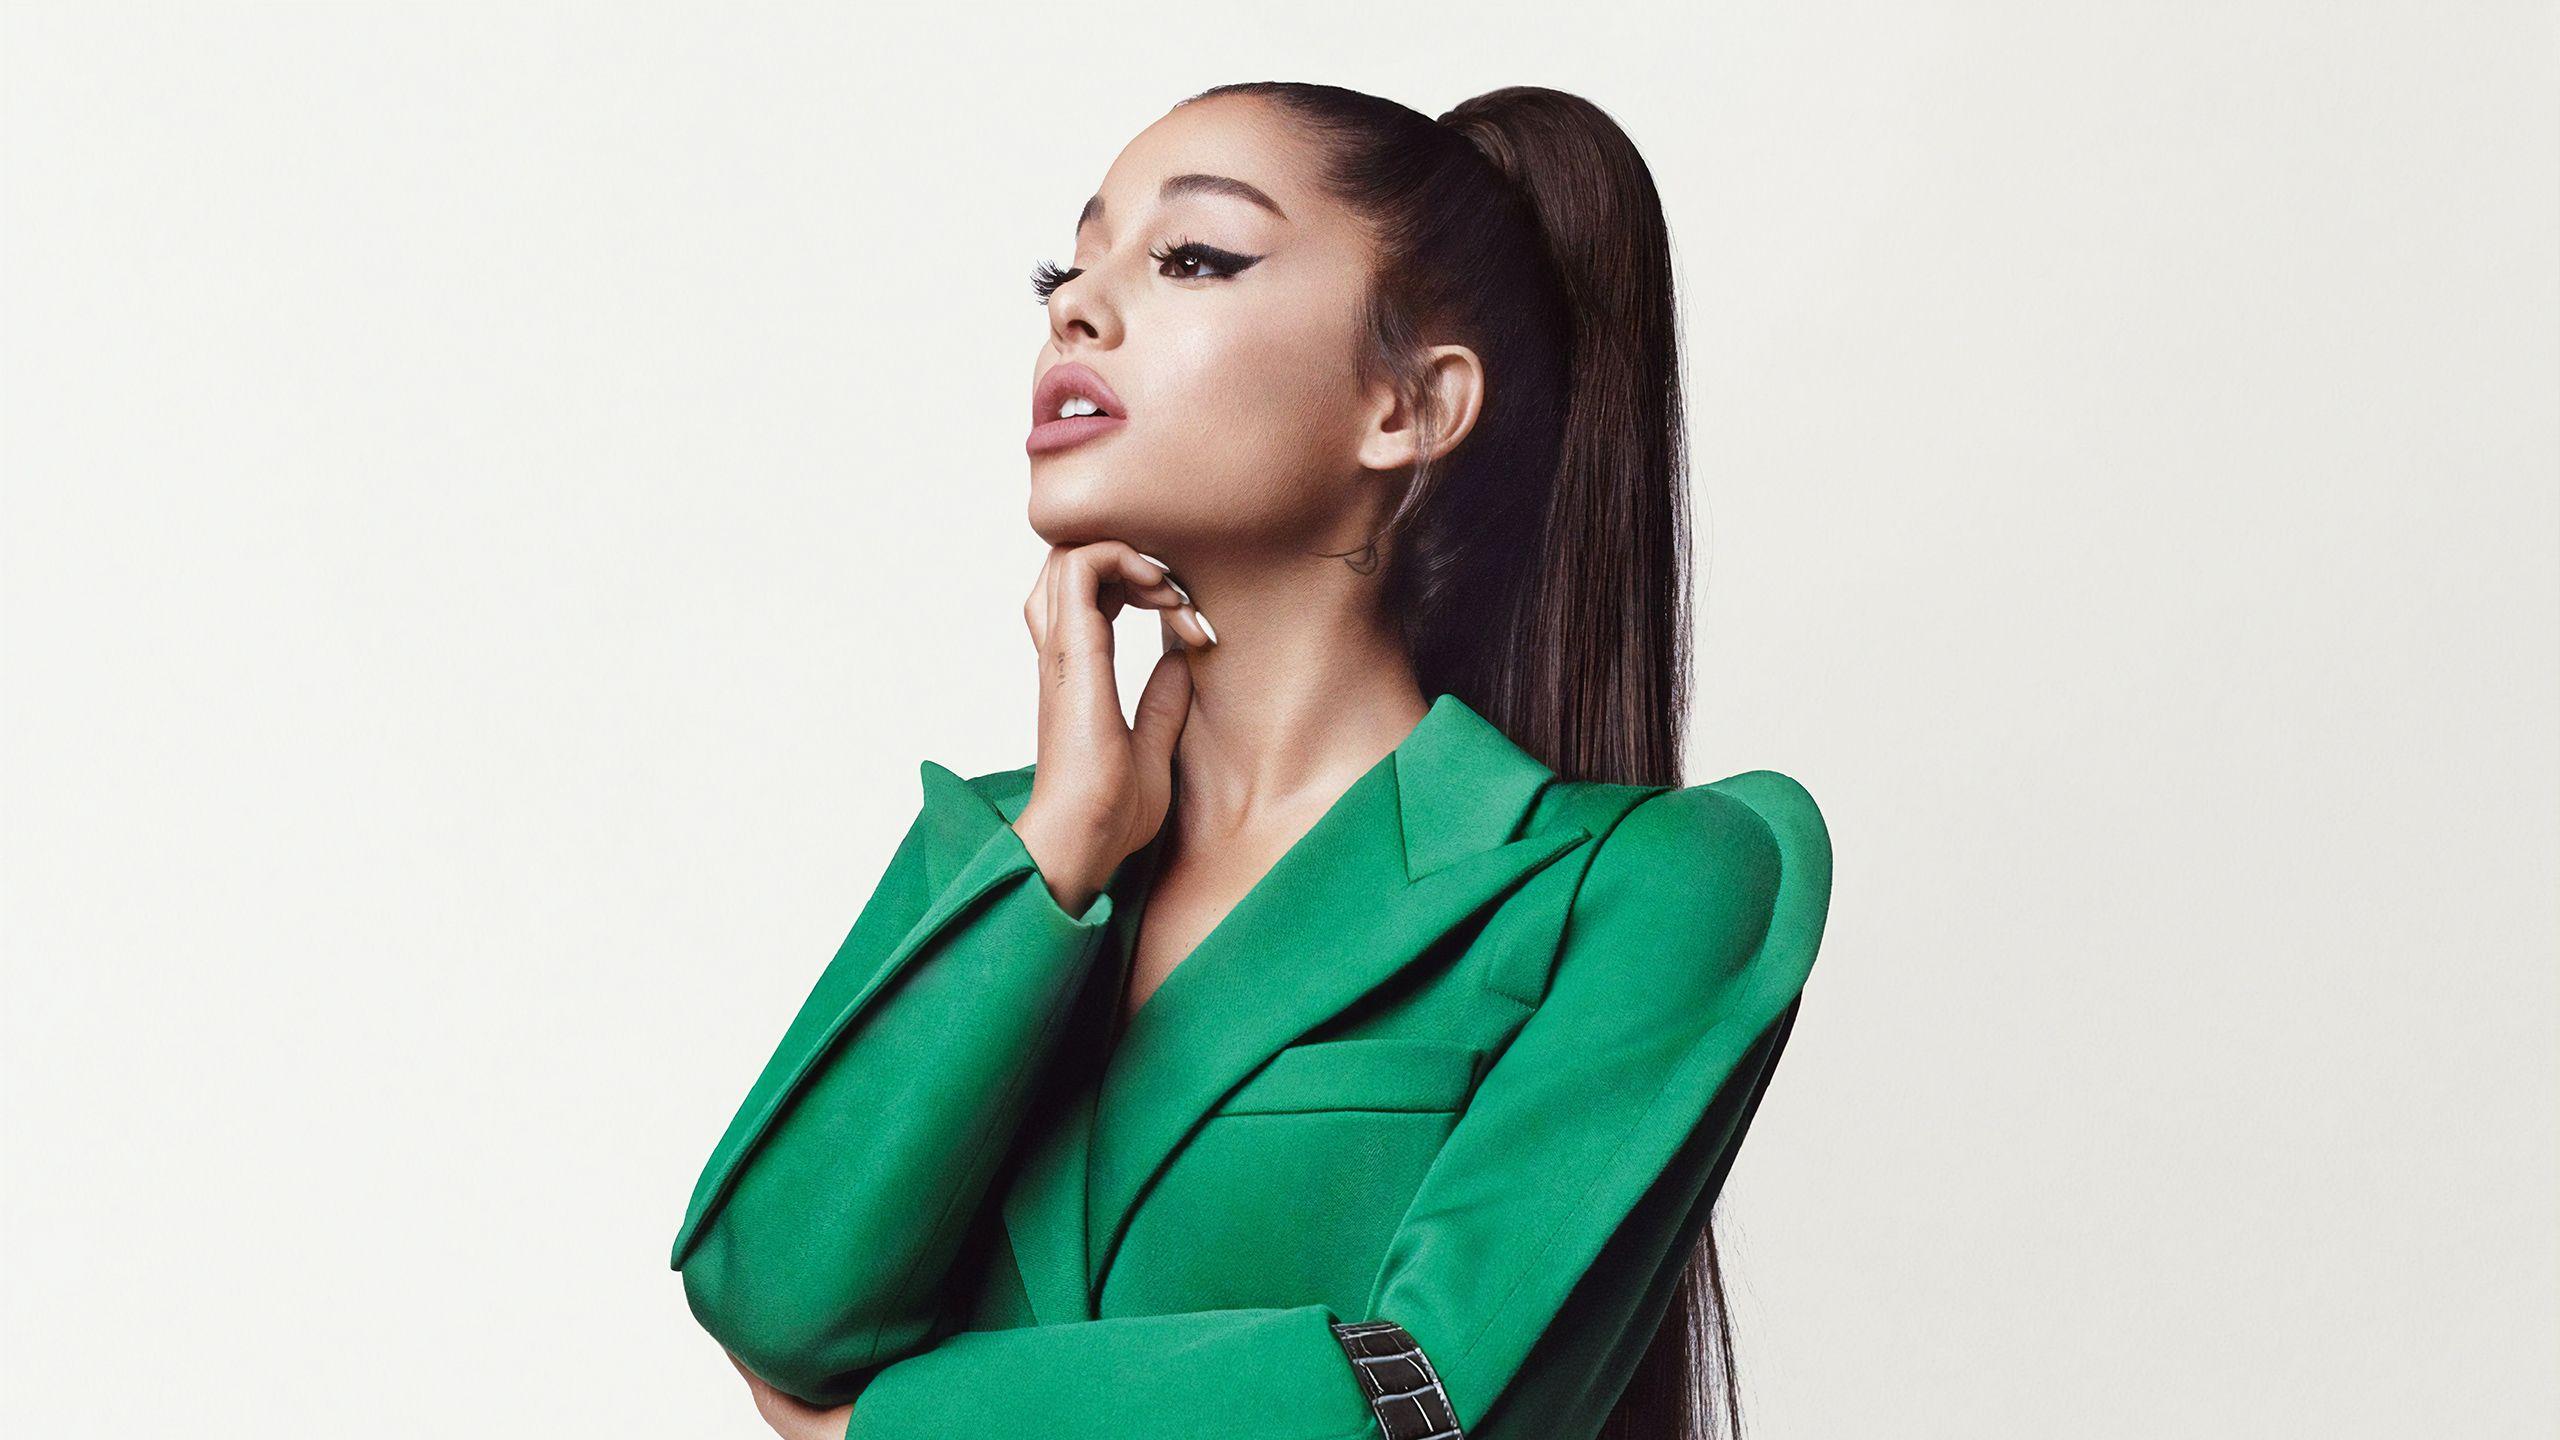 Ariana Grande 2019 Wallpapers - Top Free Ariana Grande ...